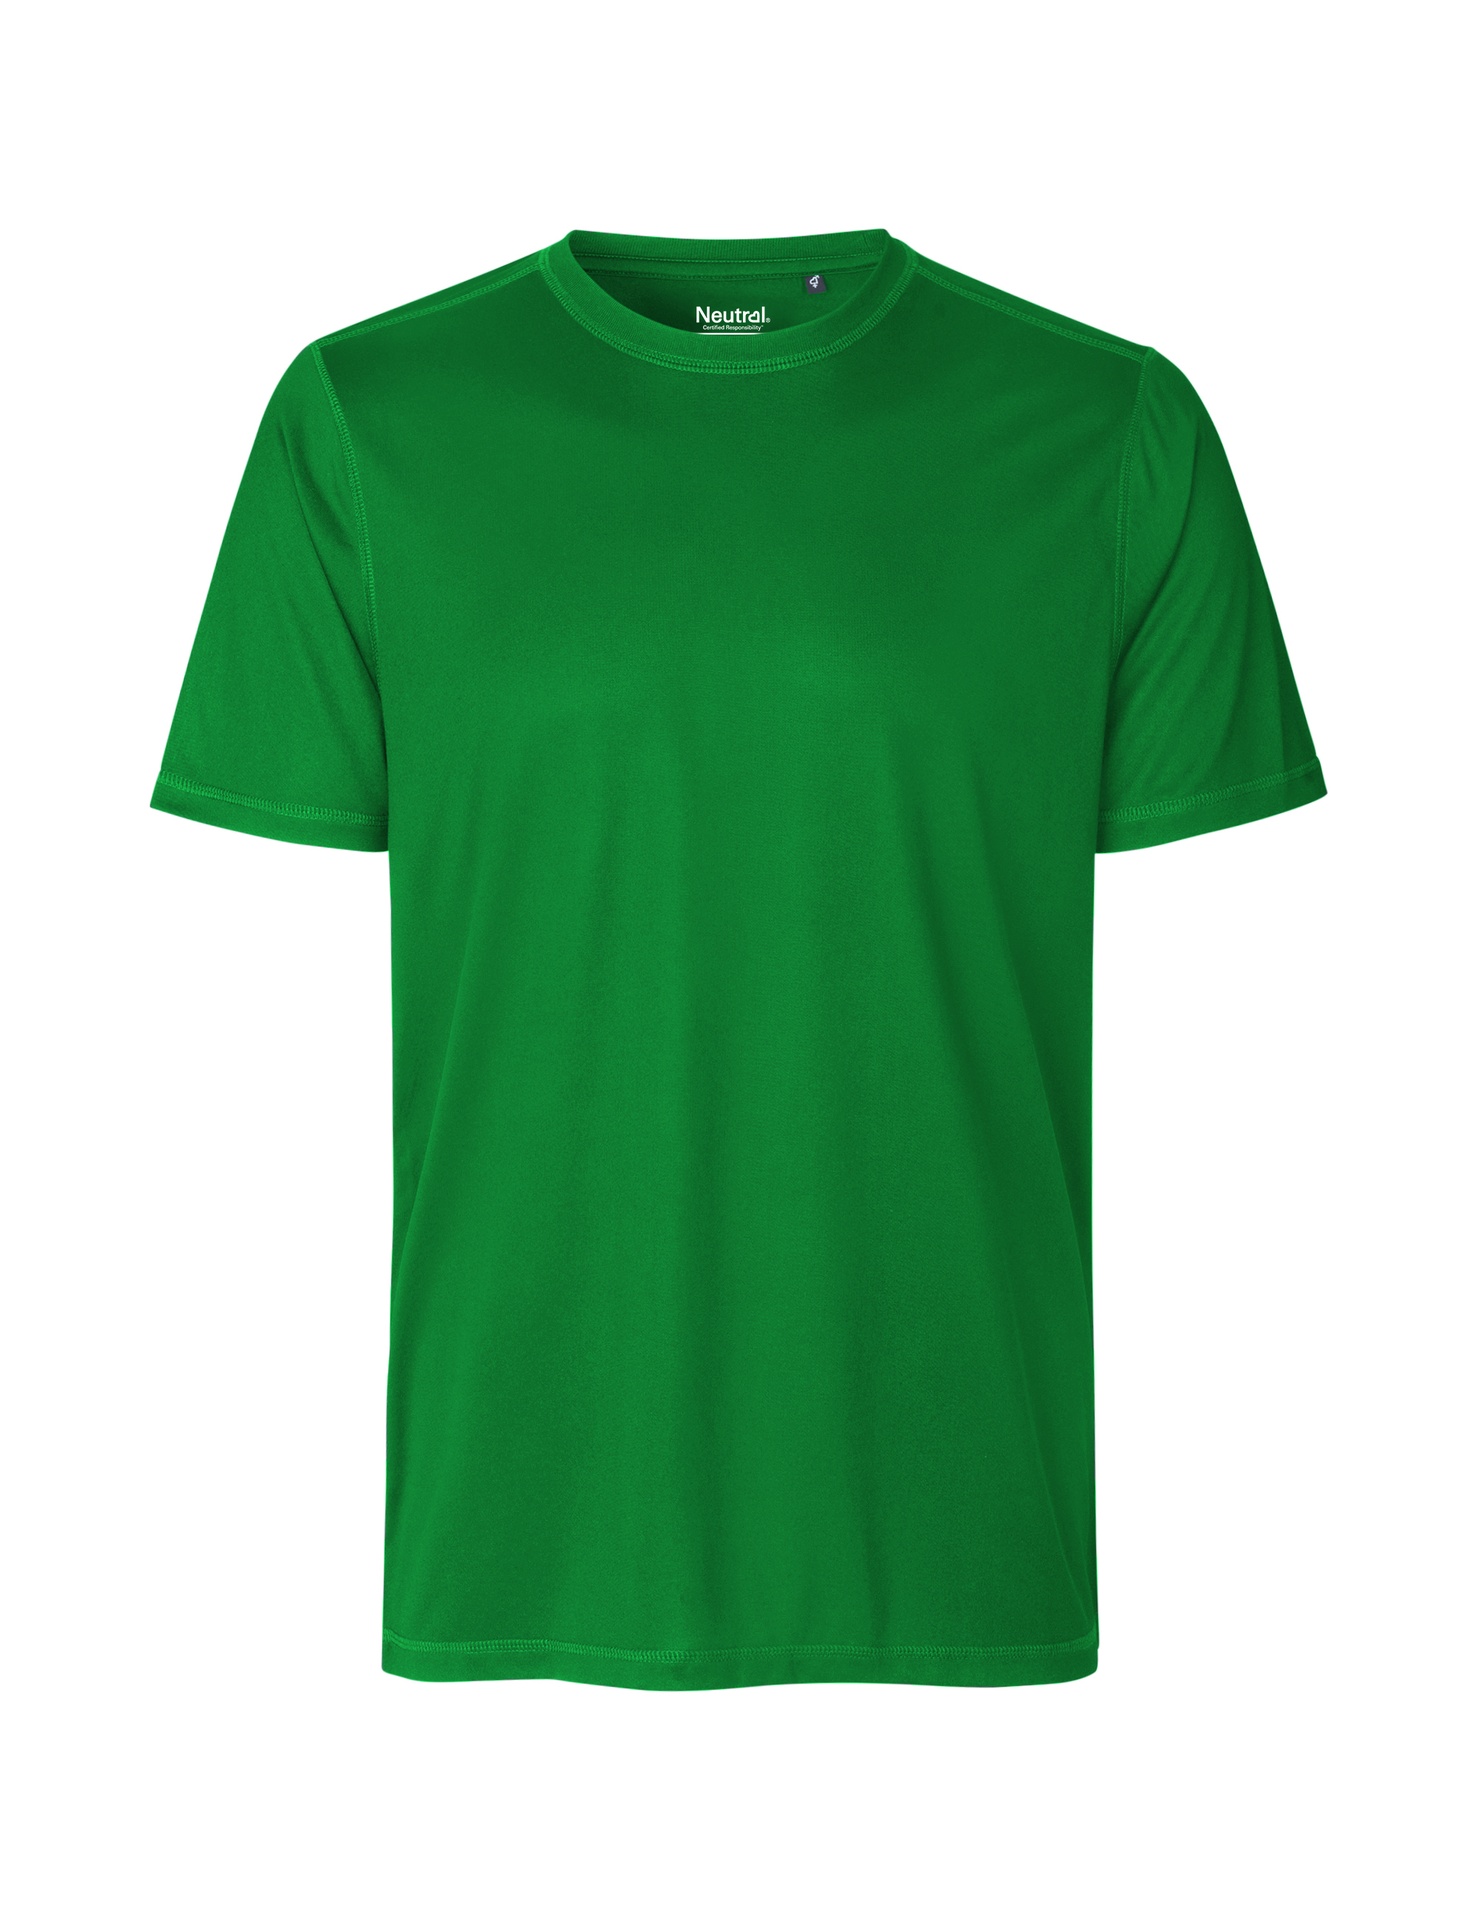 [PR/03809] Recycled Performance T-Shirt (Green 67, M)